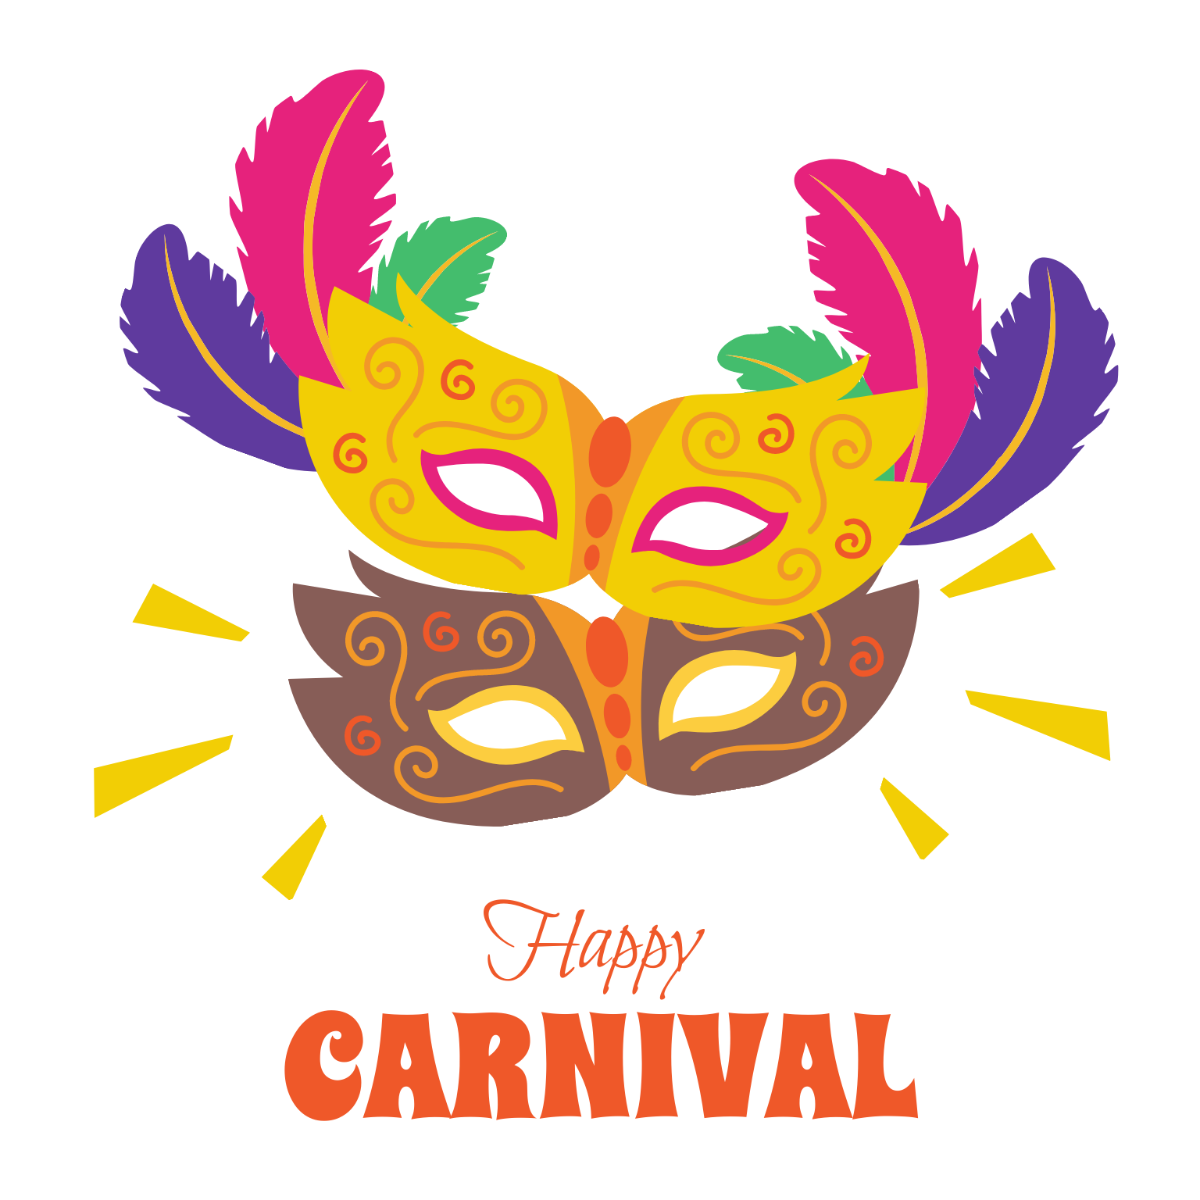 Free Carnival Festival Illustration Template